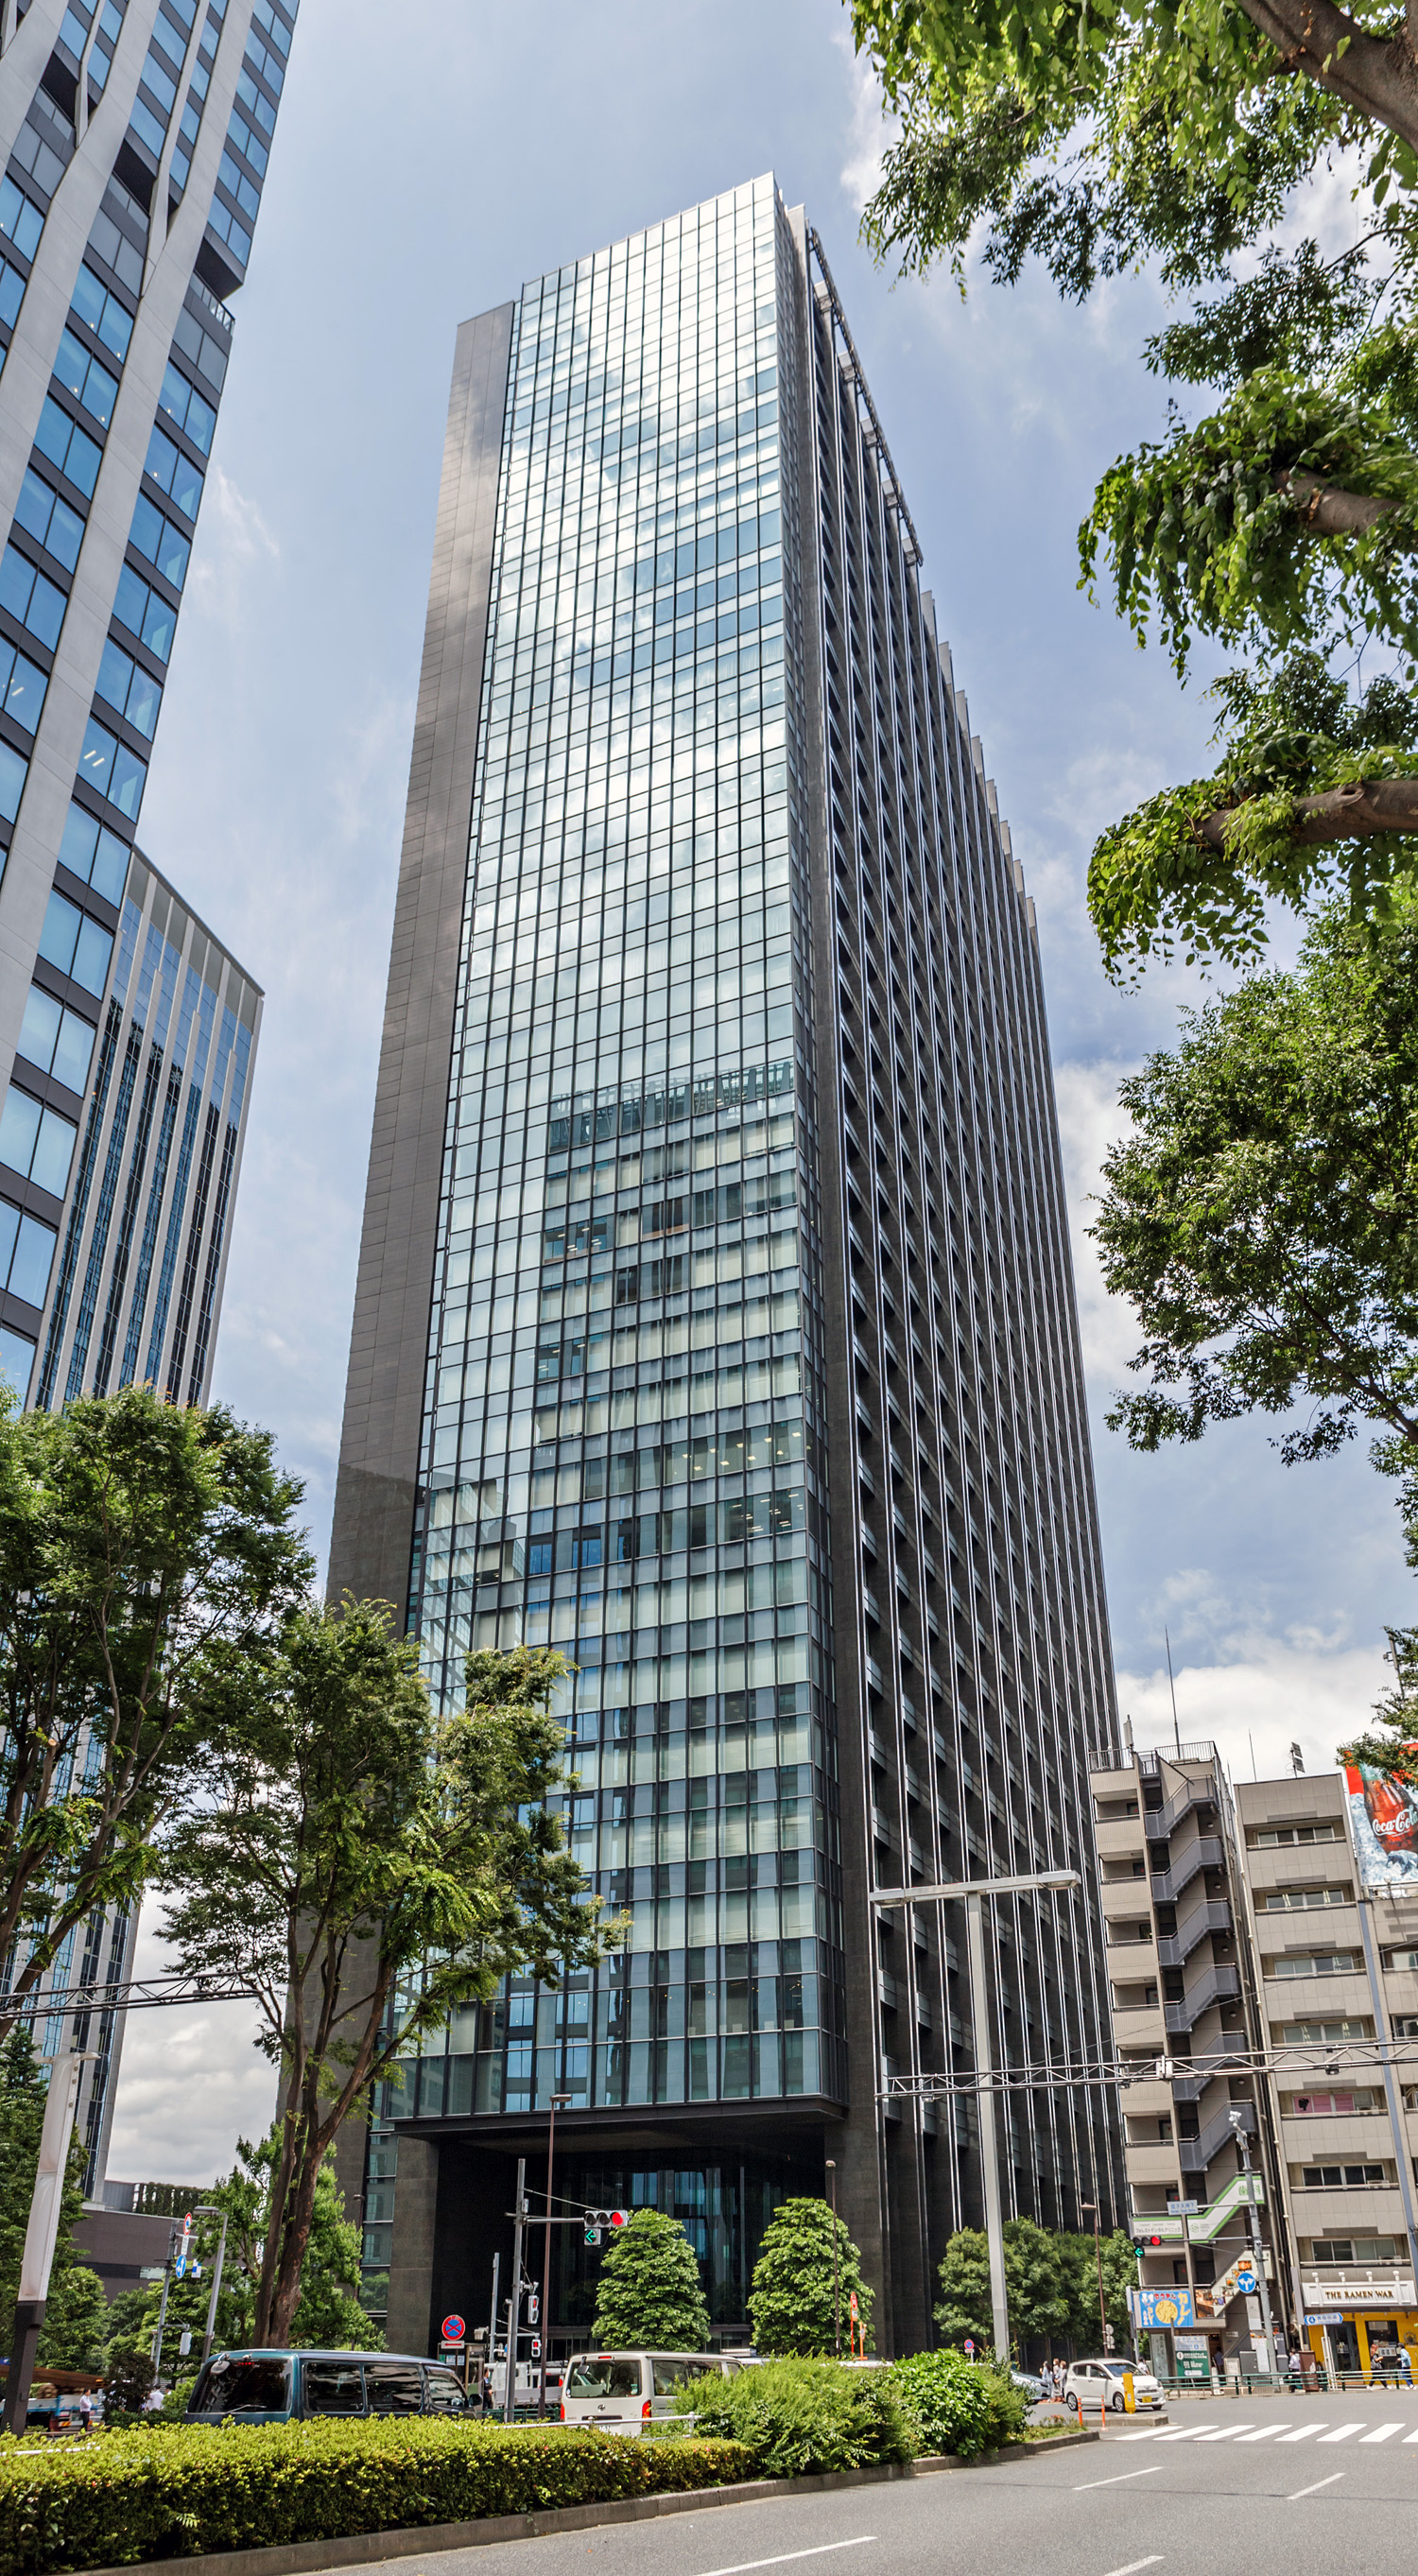 Sumitomo Fudosan Shinjuku Grand Tower - View from the south 